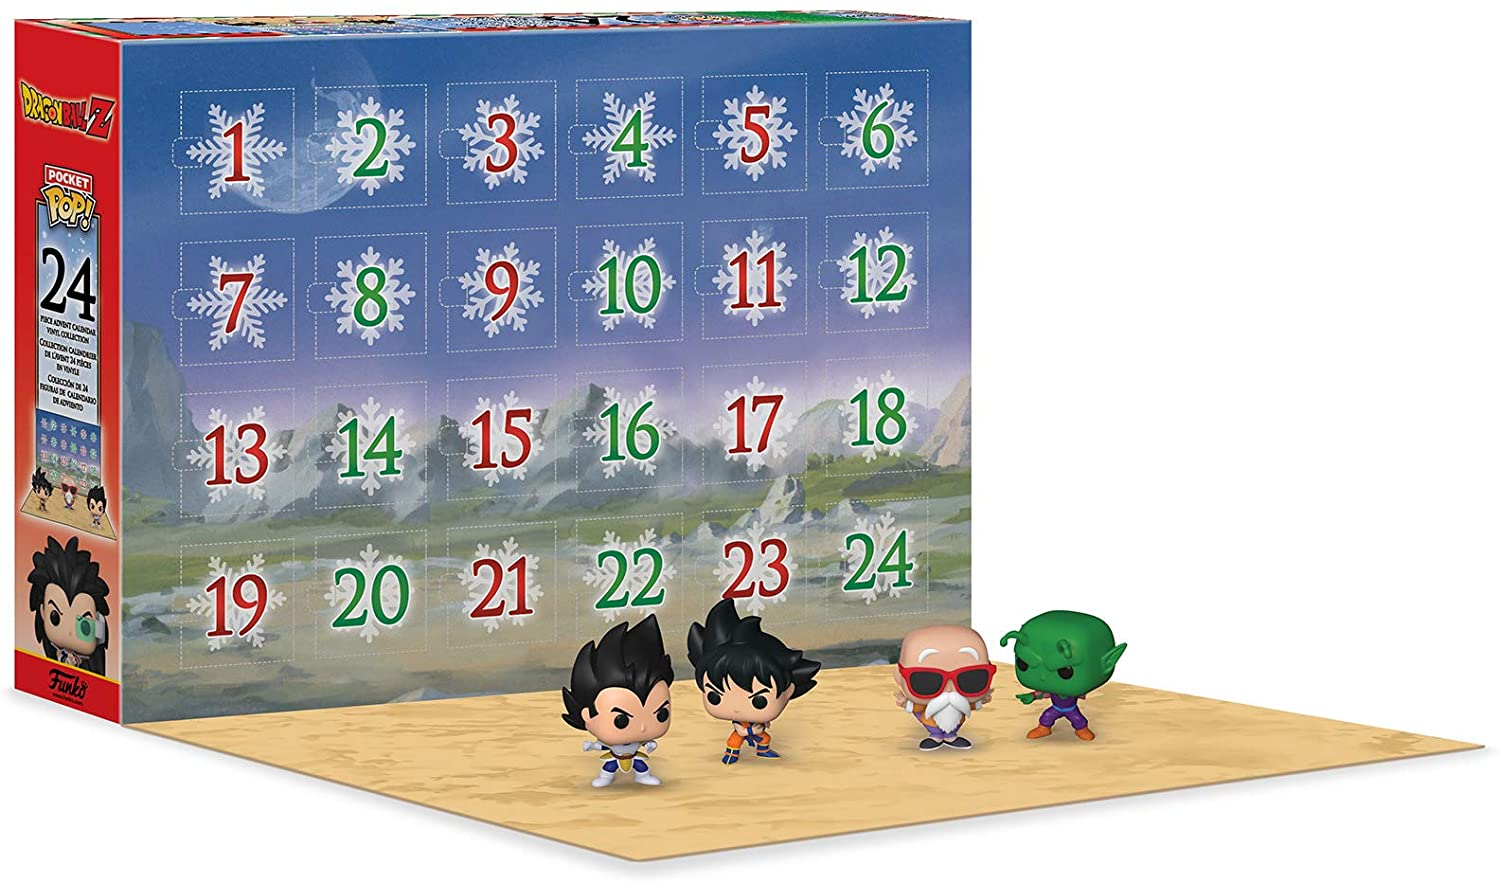 2020 Funko Dragon Ball Z Advent Calendar Available For PreOrder Now